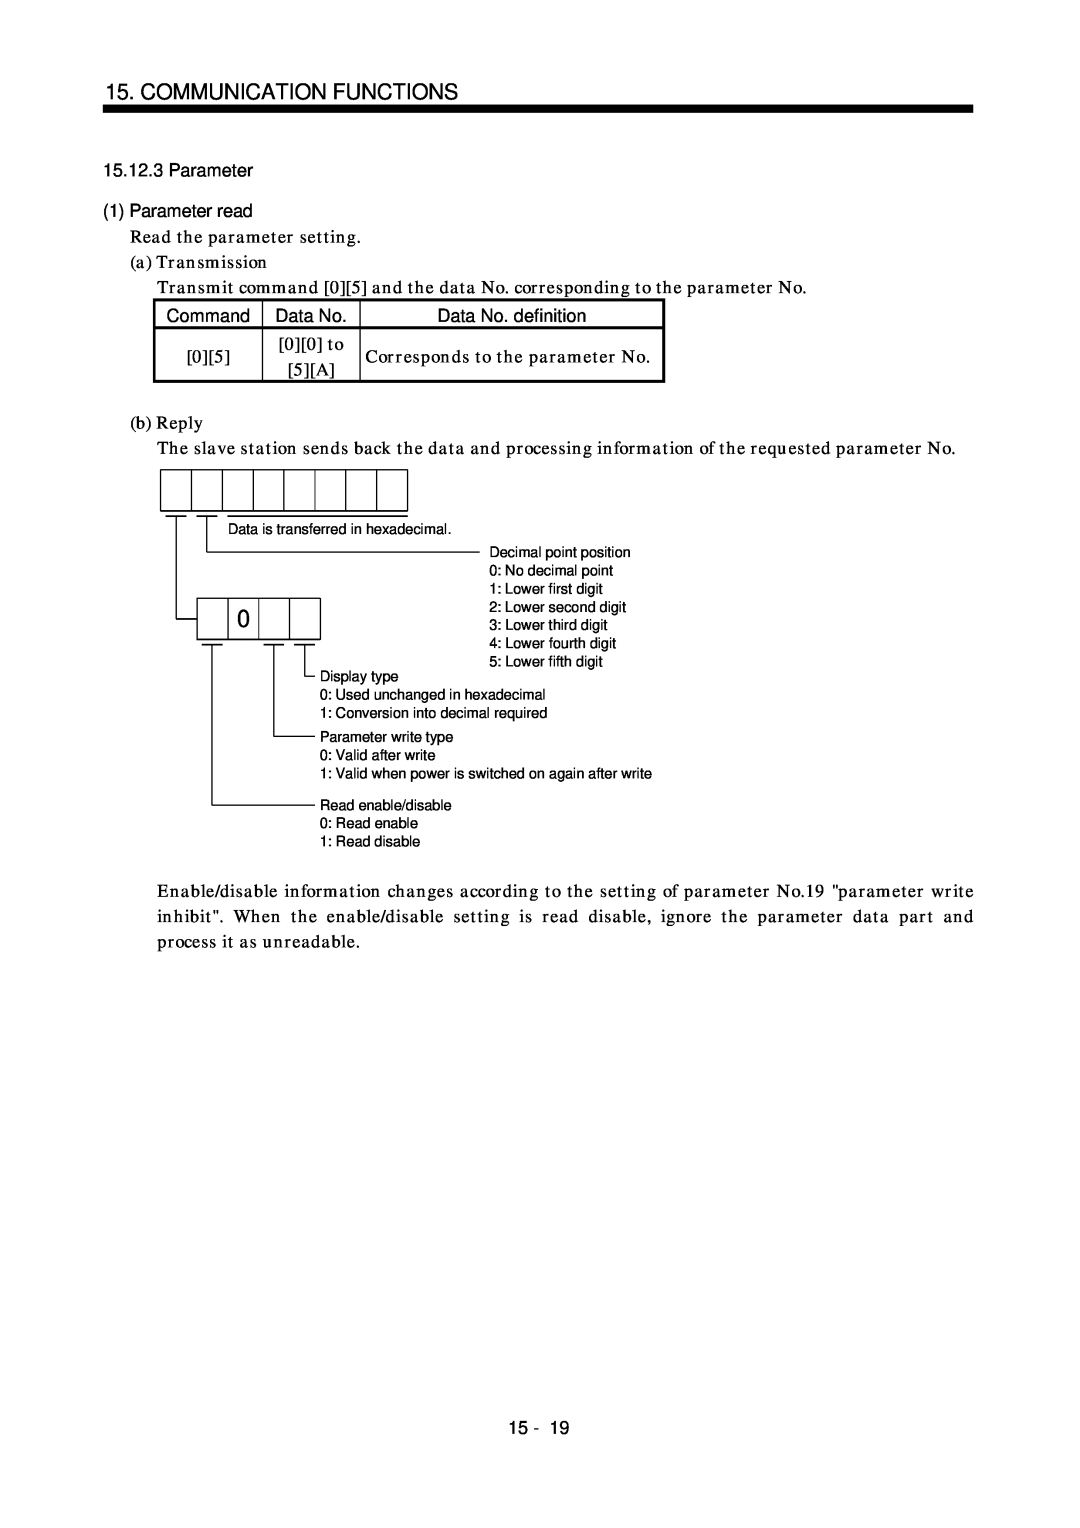 Mitsubishi Electronics MR-J2S- CL Parameter 1Parameter read, Data No. definition, Communication Functions, Command, 15 